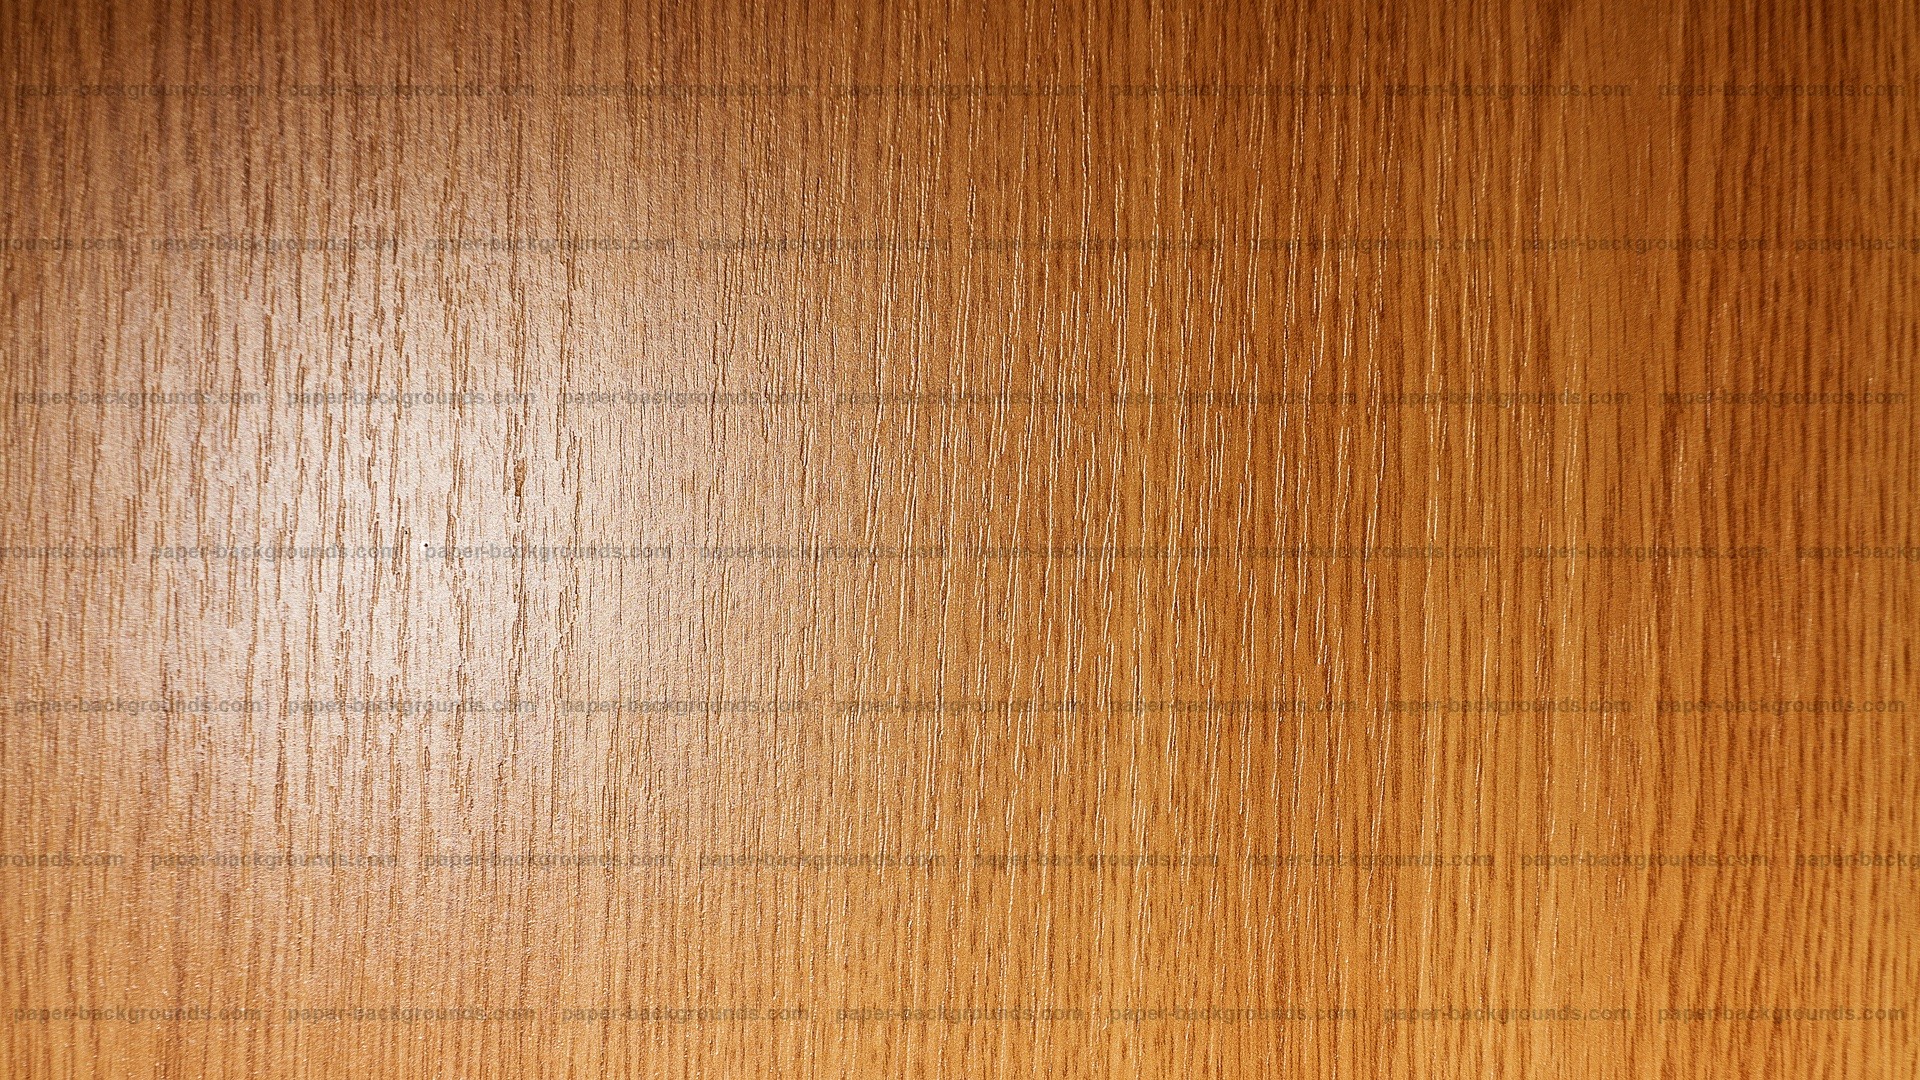 1920x1080, Brown Wood Furniture Background Texture - HD Wallpaper 